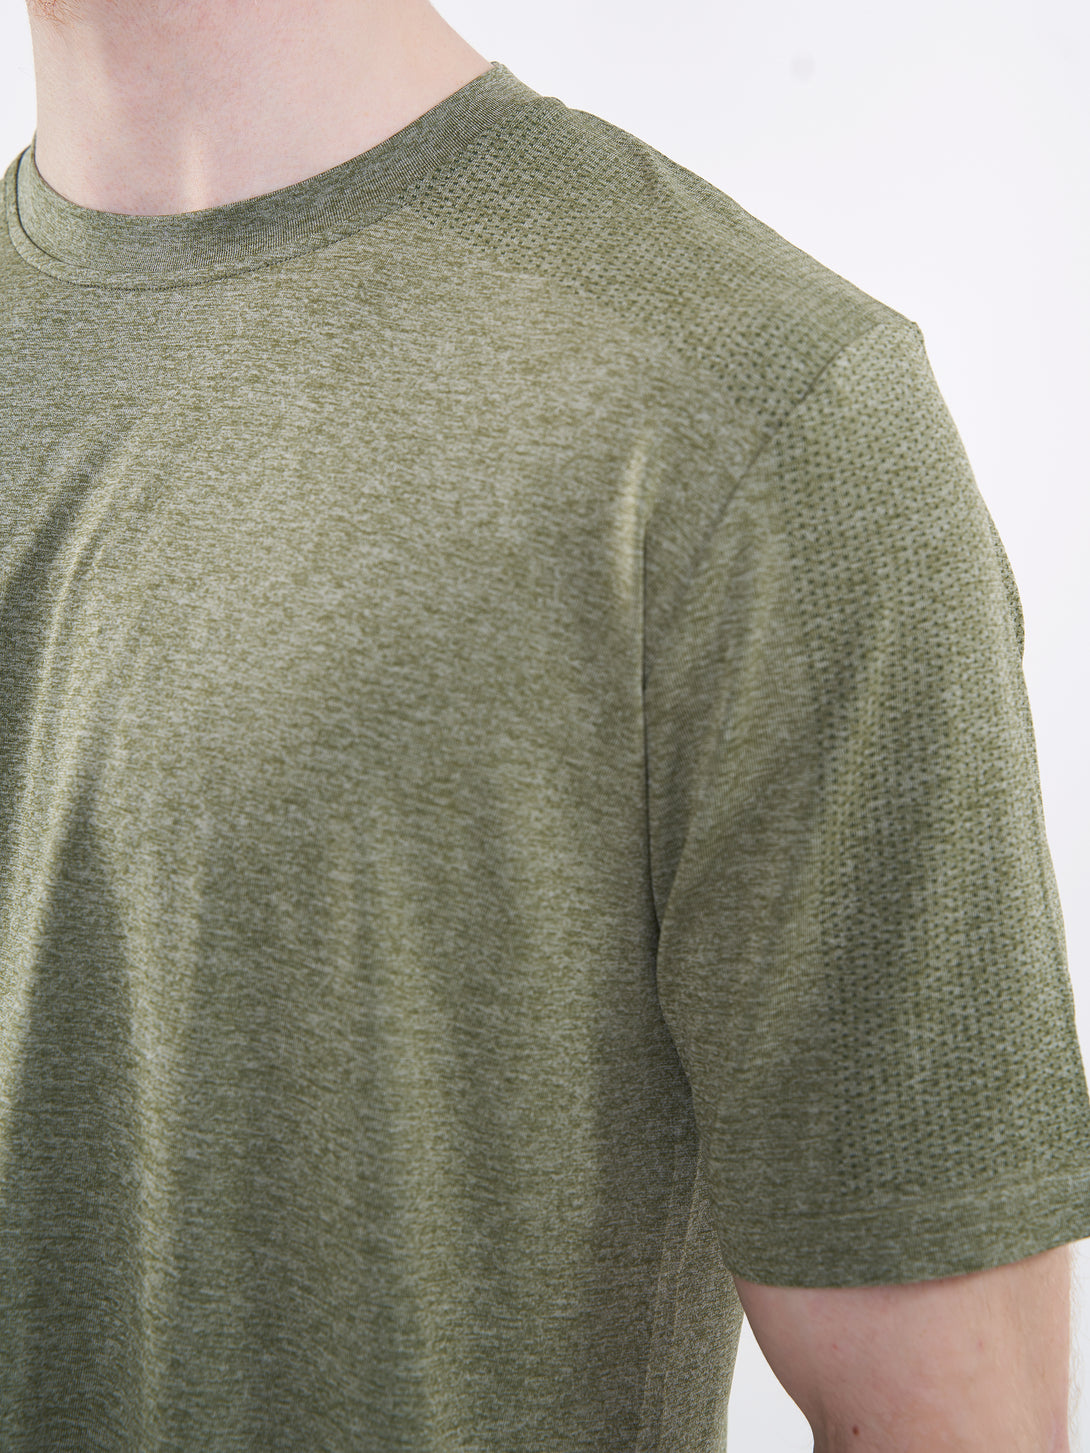 A Man Wearing Zen Khaki Color Unisex Seamless Melange T-Shirt. Enhanced Comfort